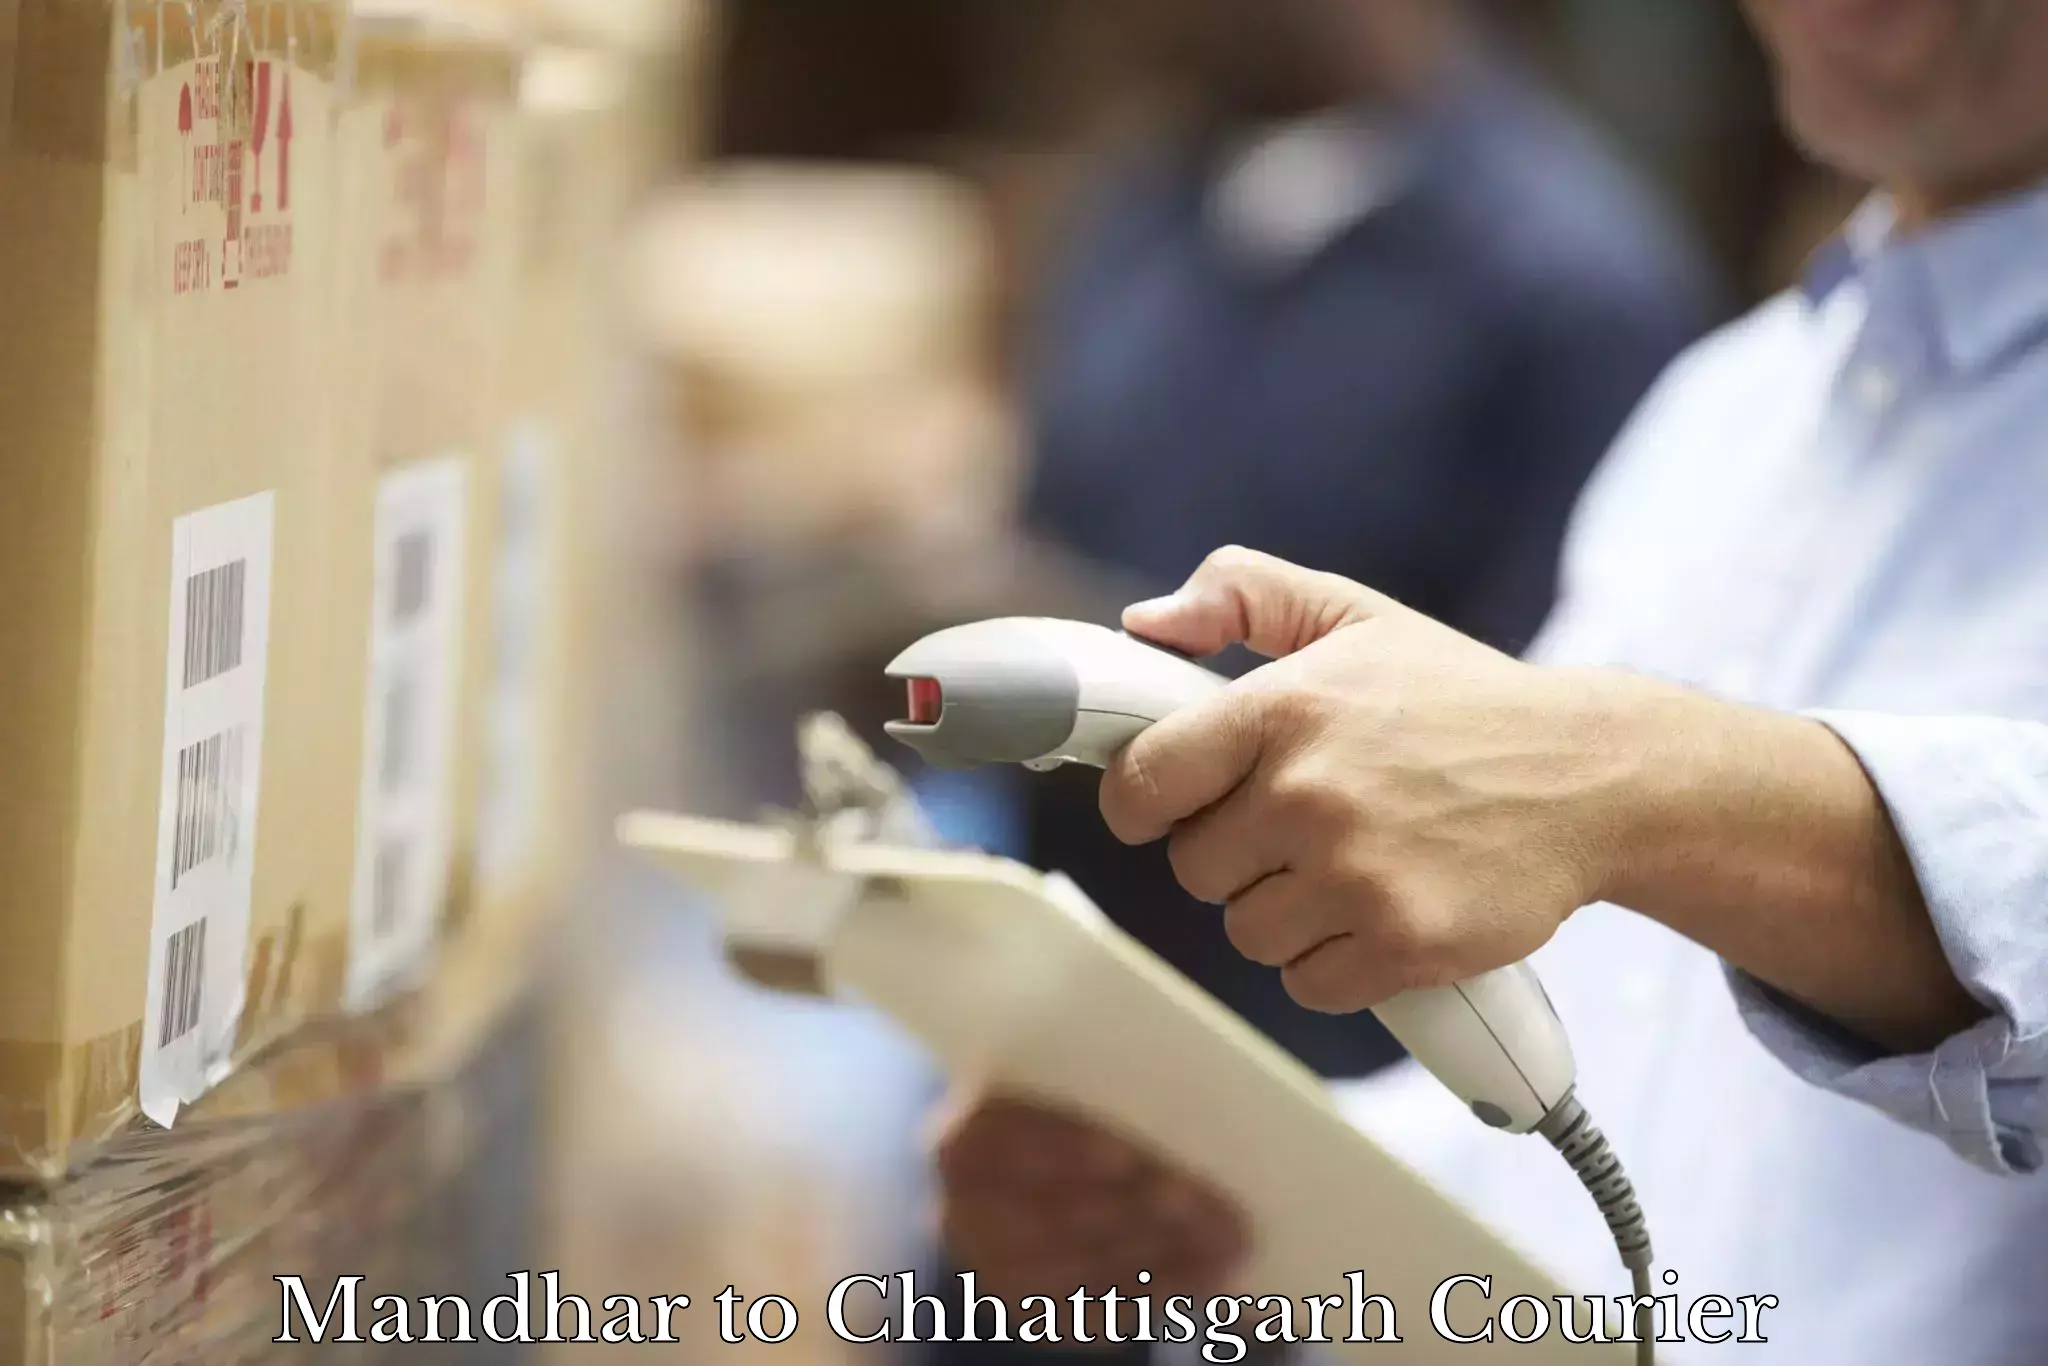 Online shipping calculator Mandhar to Patna Chhattisgarh